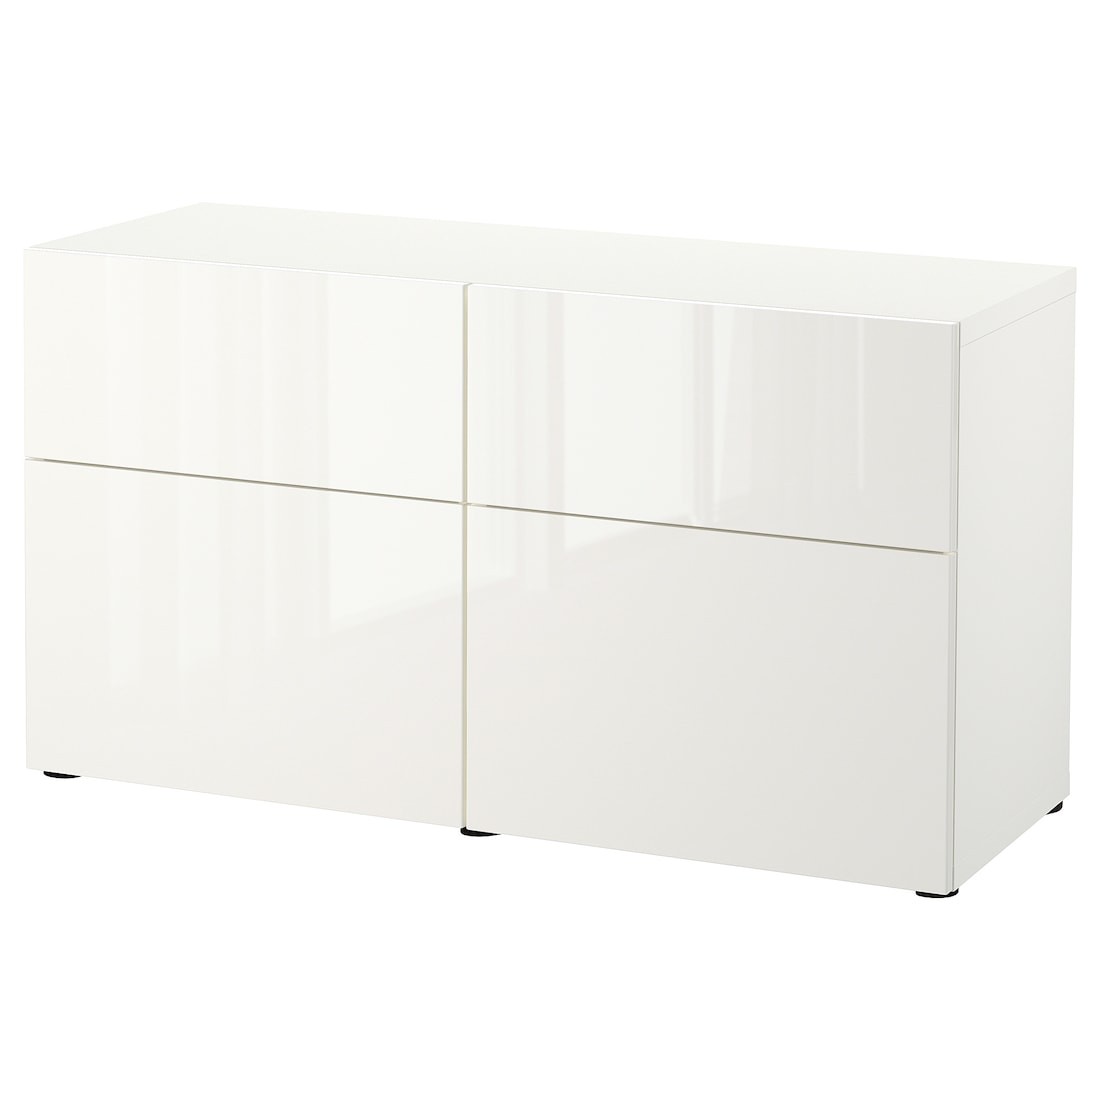 IKEA BESTÅ БЕСТО Комбинация для хранения с дверцами / ящиками, белый / Selsviken глянцевый / белый, 120x42x65 см 29324773 293.247.73